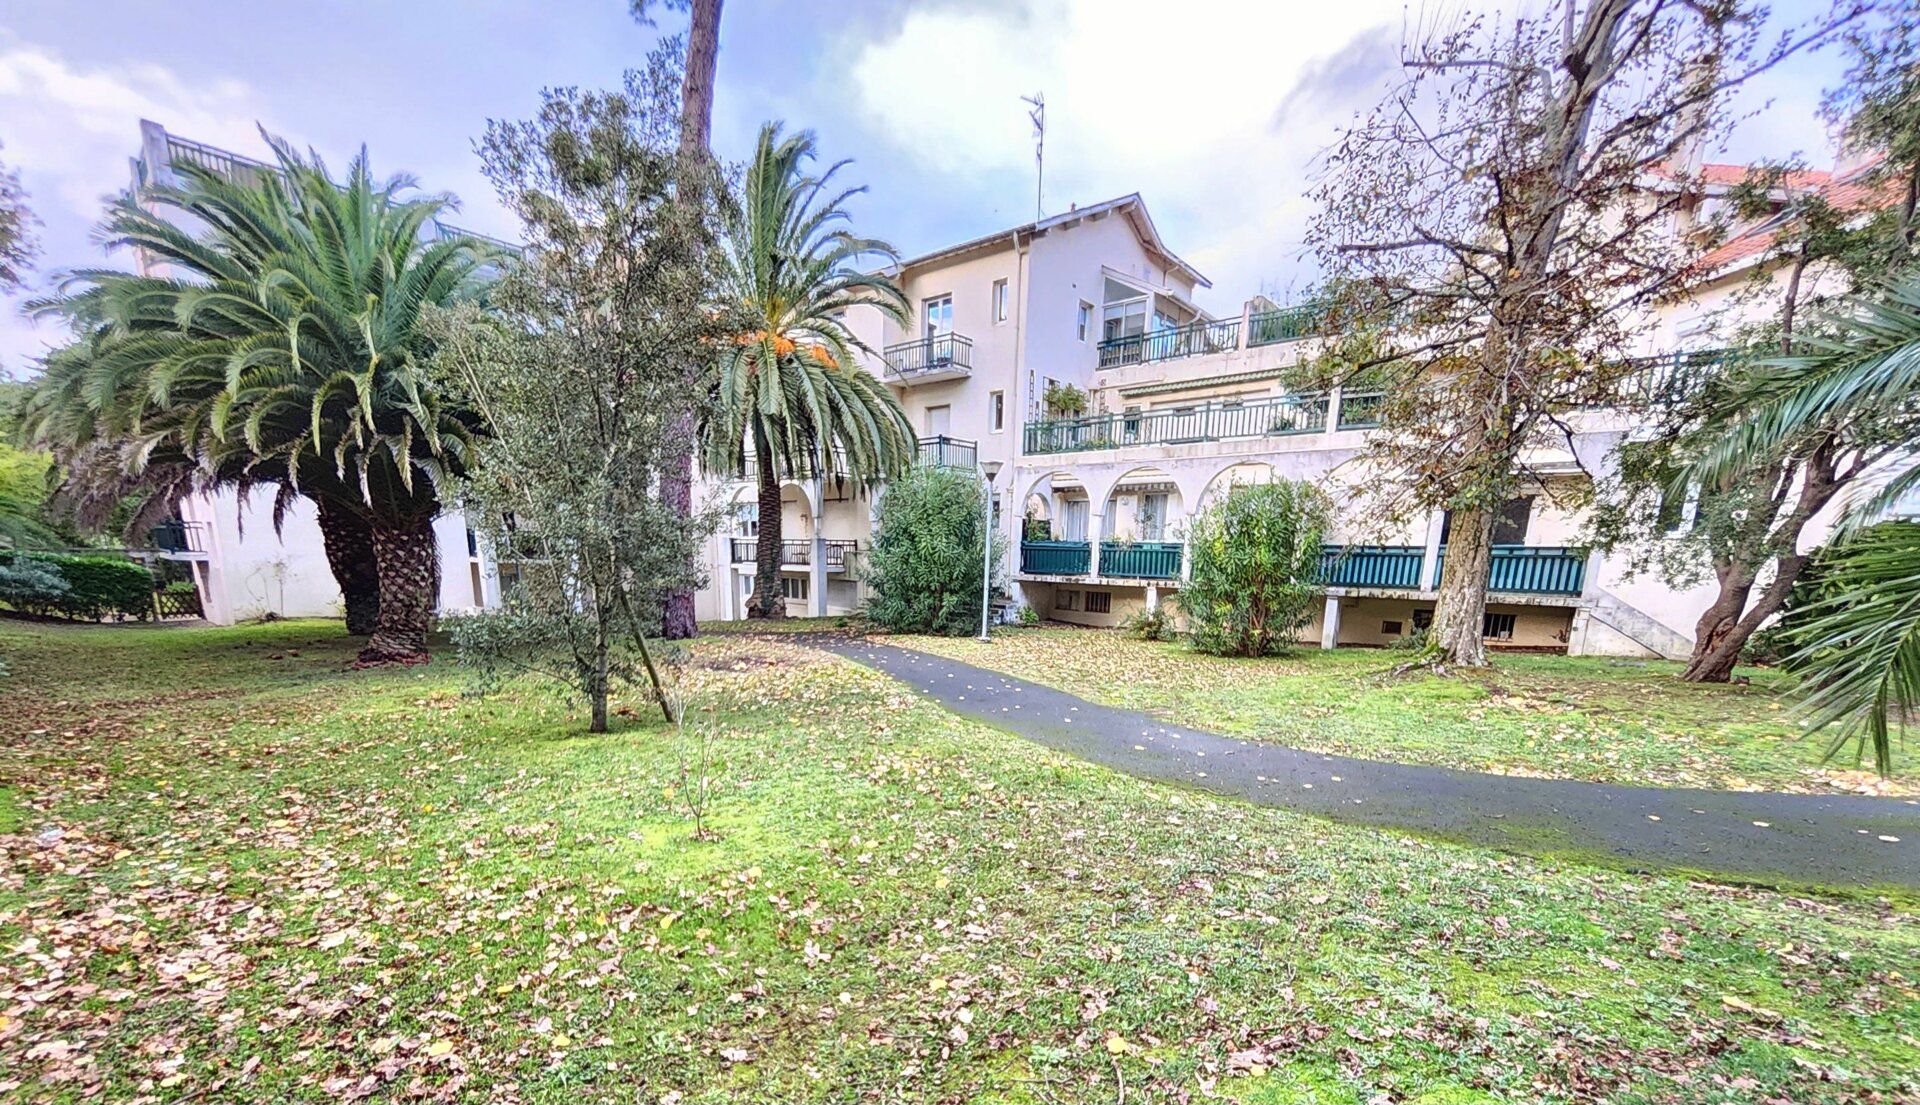 Appartement à vendre 3 55.16m2 à Biarritz vignette-11